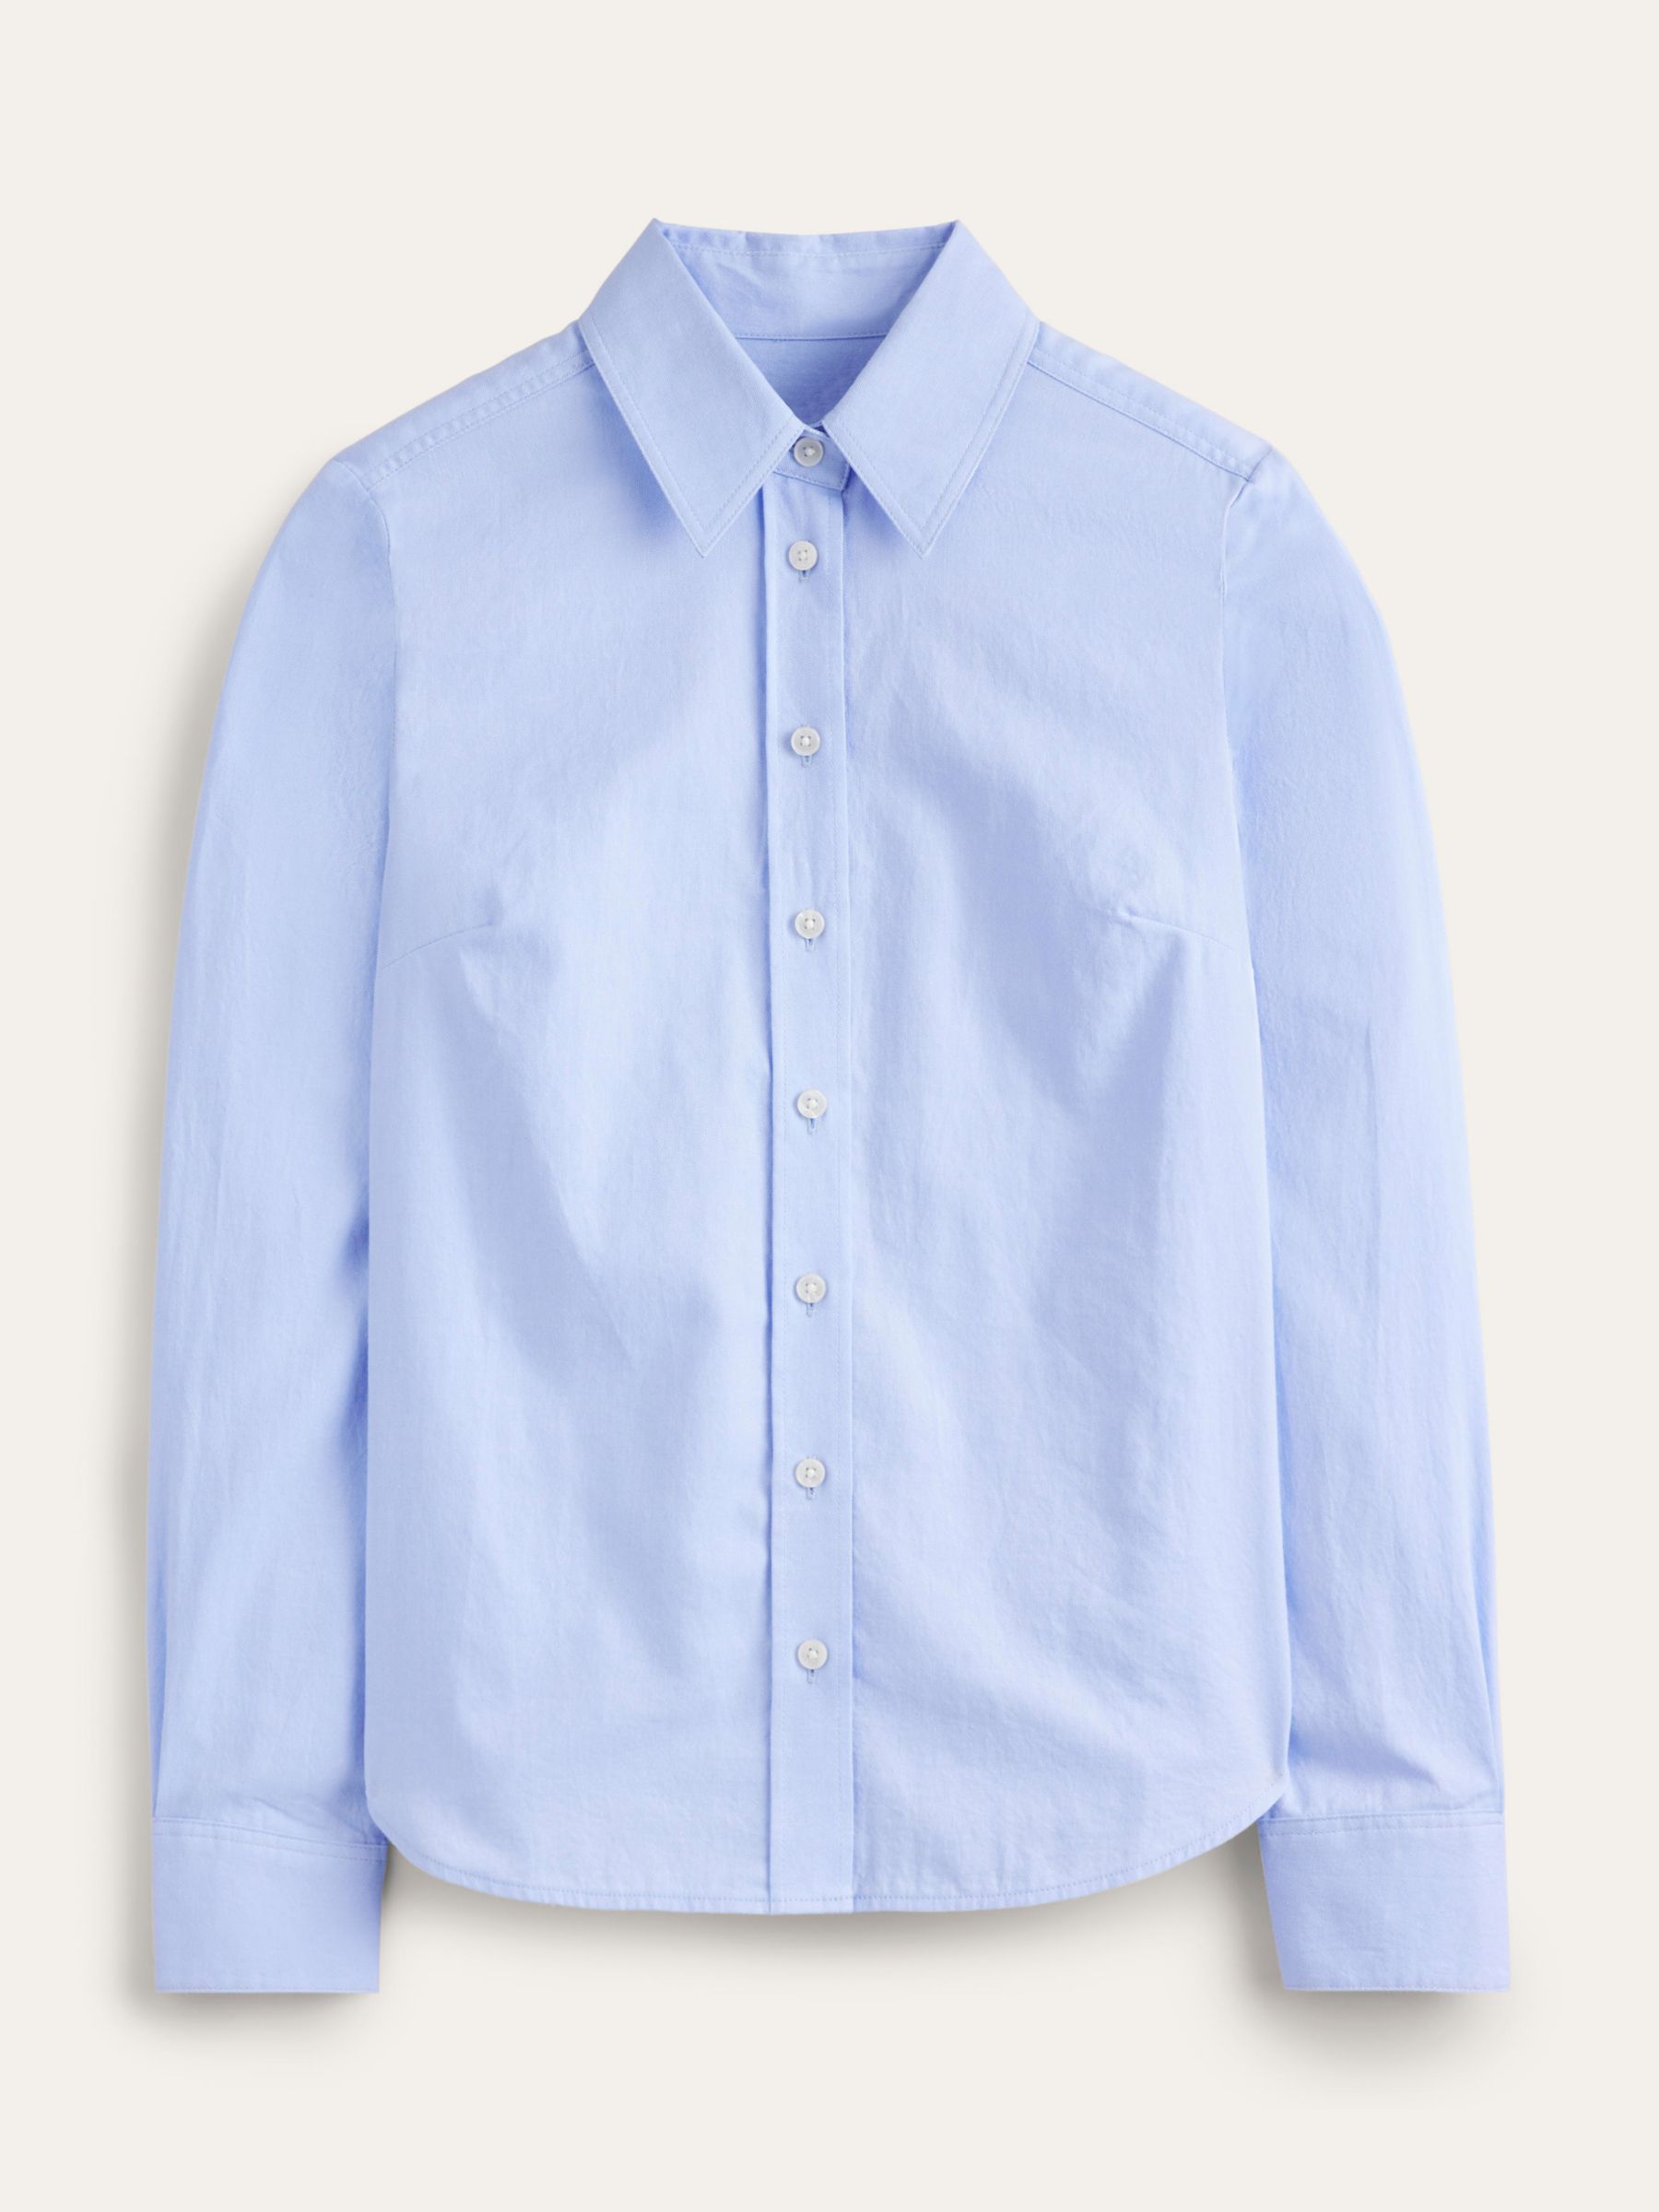 Boden Sienna Cotton Abstract Heart Shirt, Navy, Blue Oxford at John ...